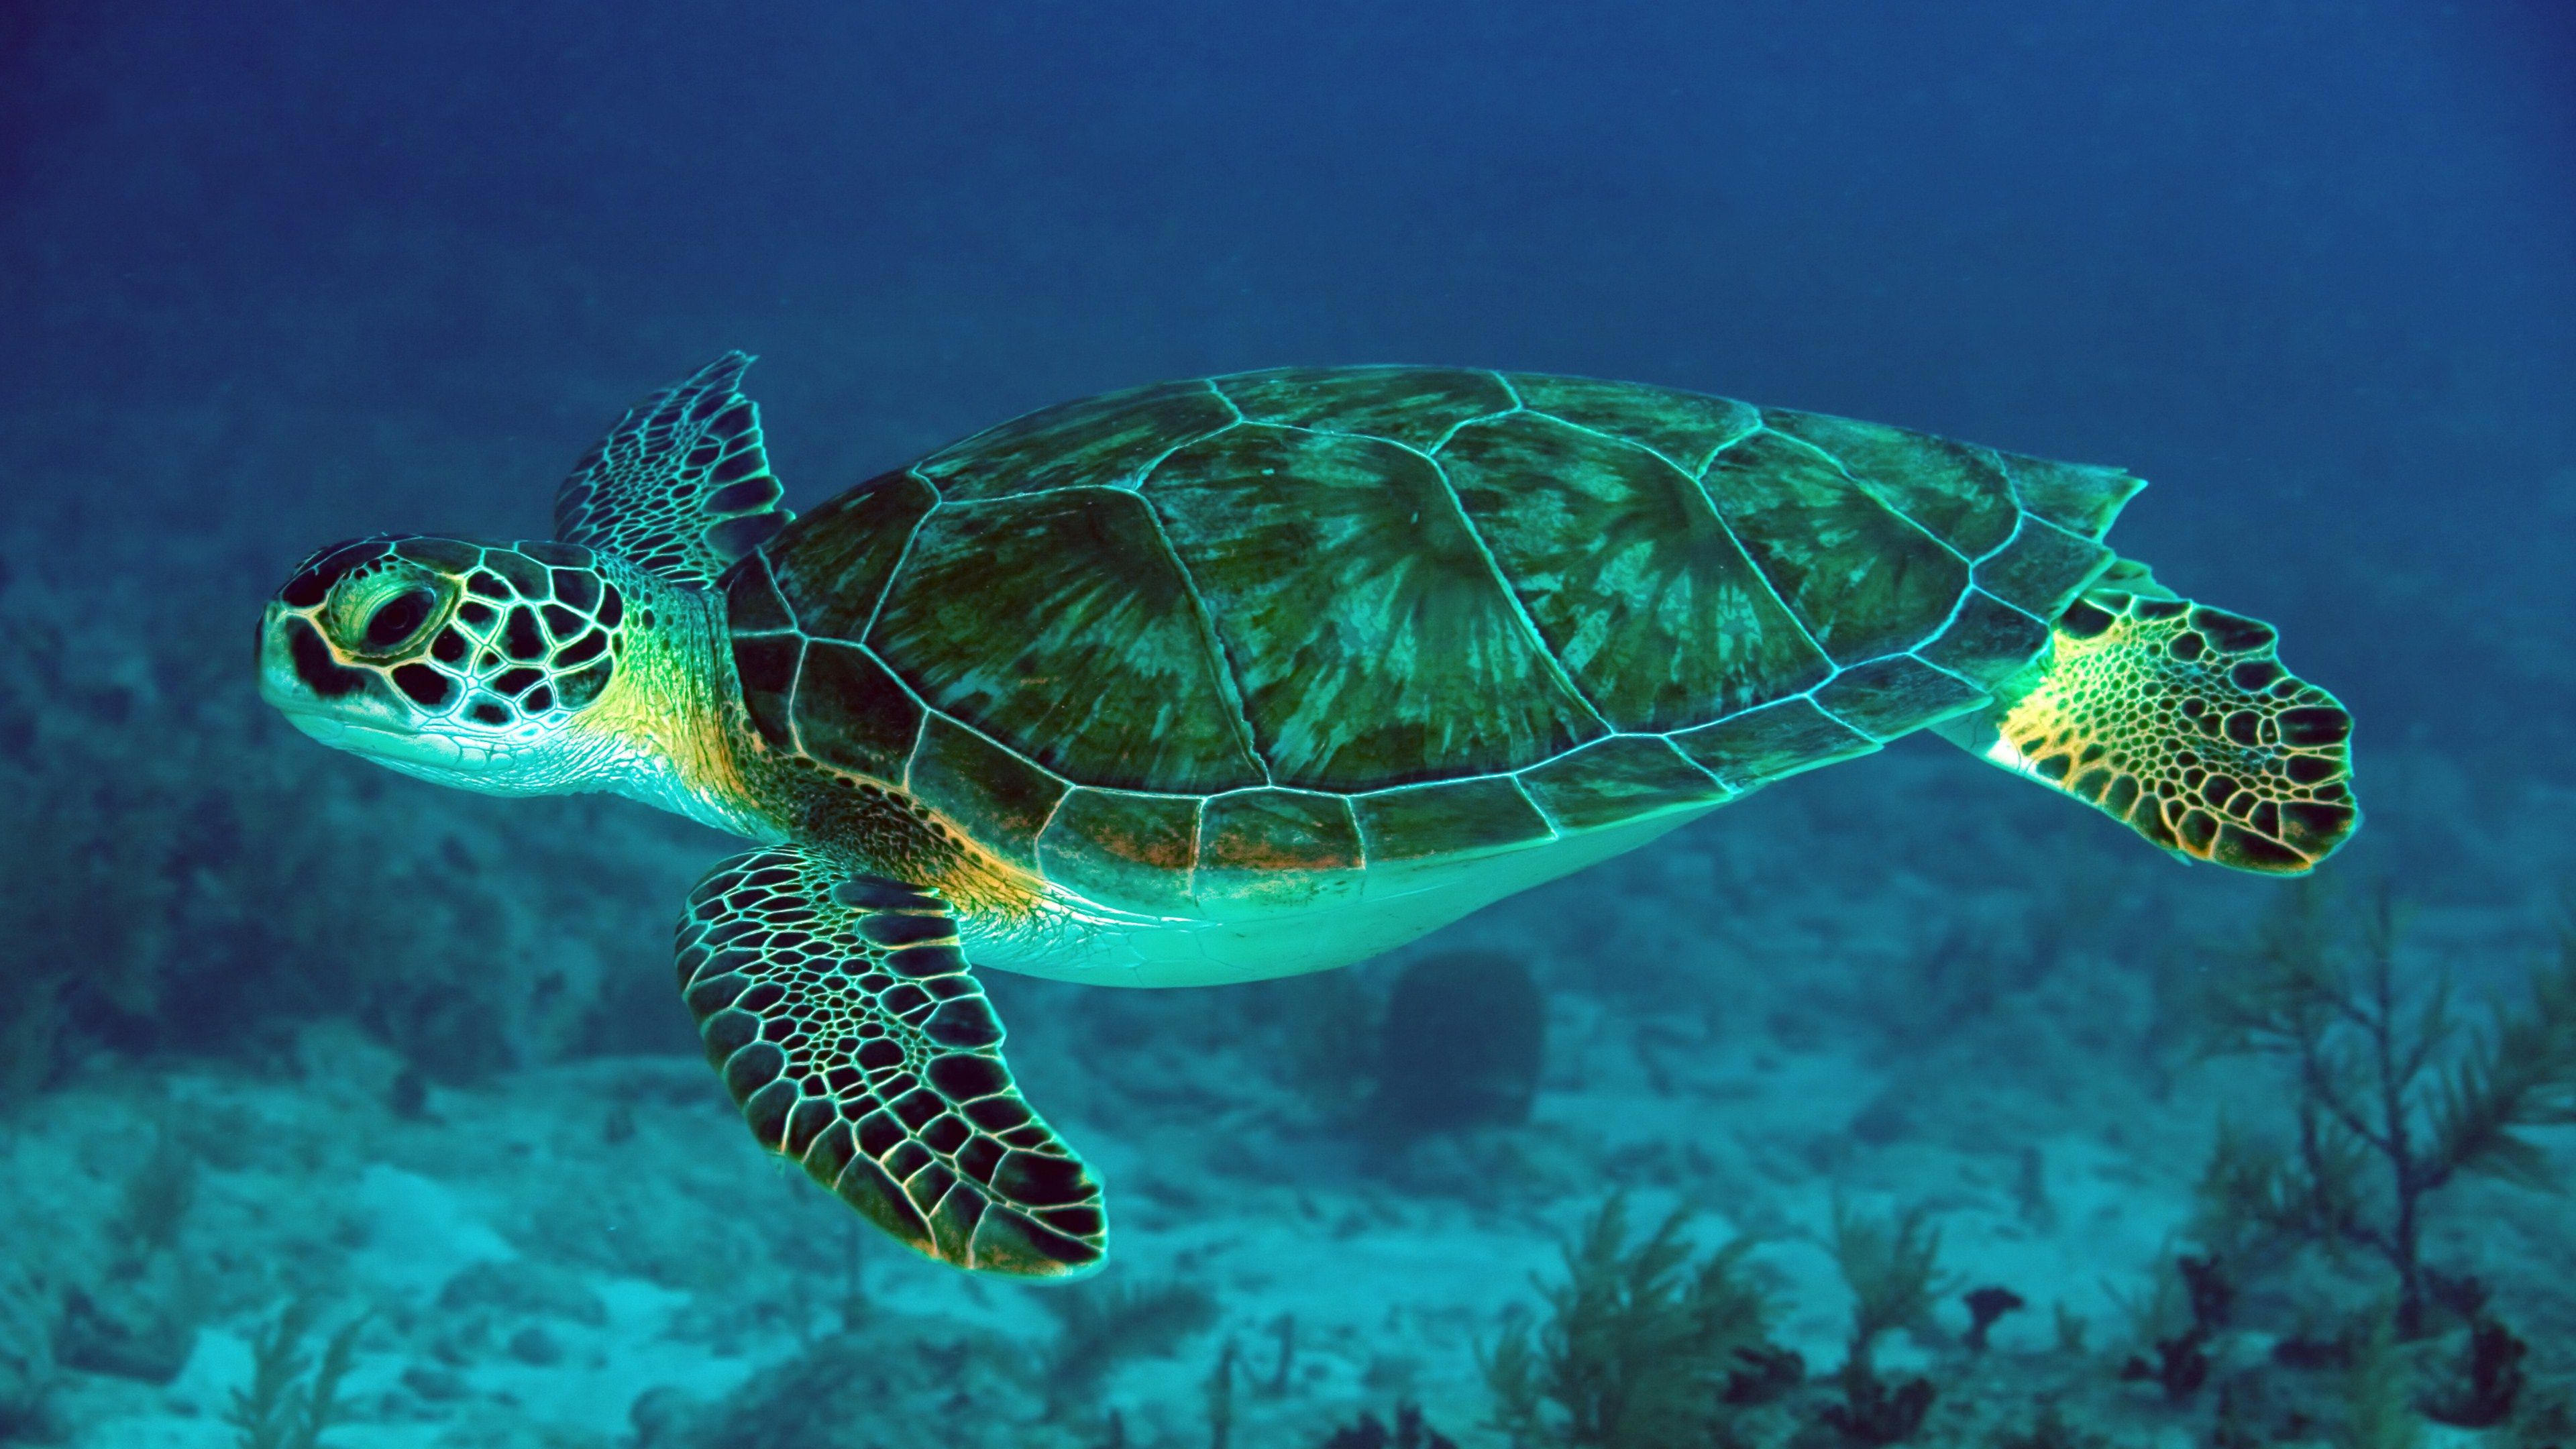 A green turtle swimming in the ocean - Sea turtle, turtle